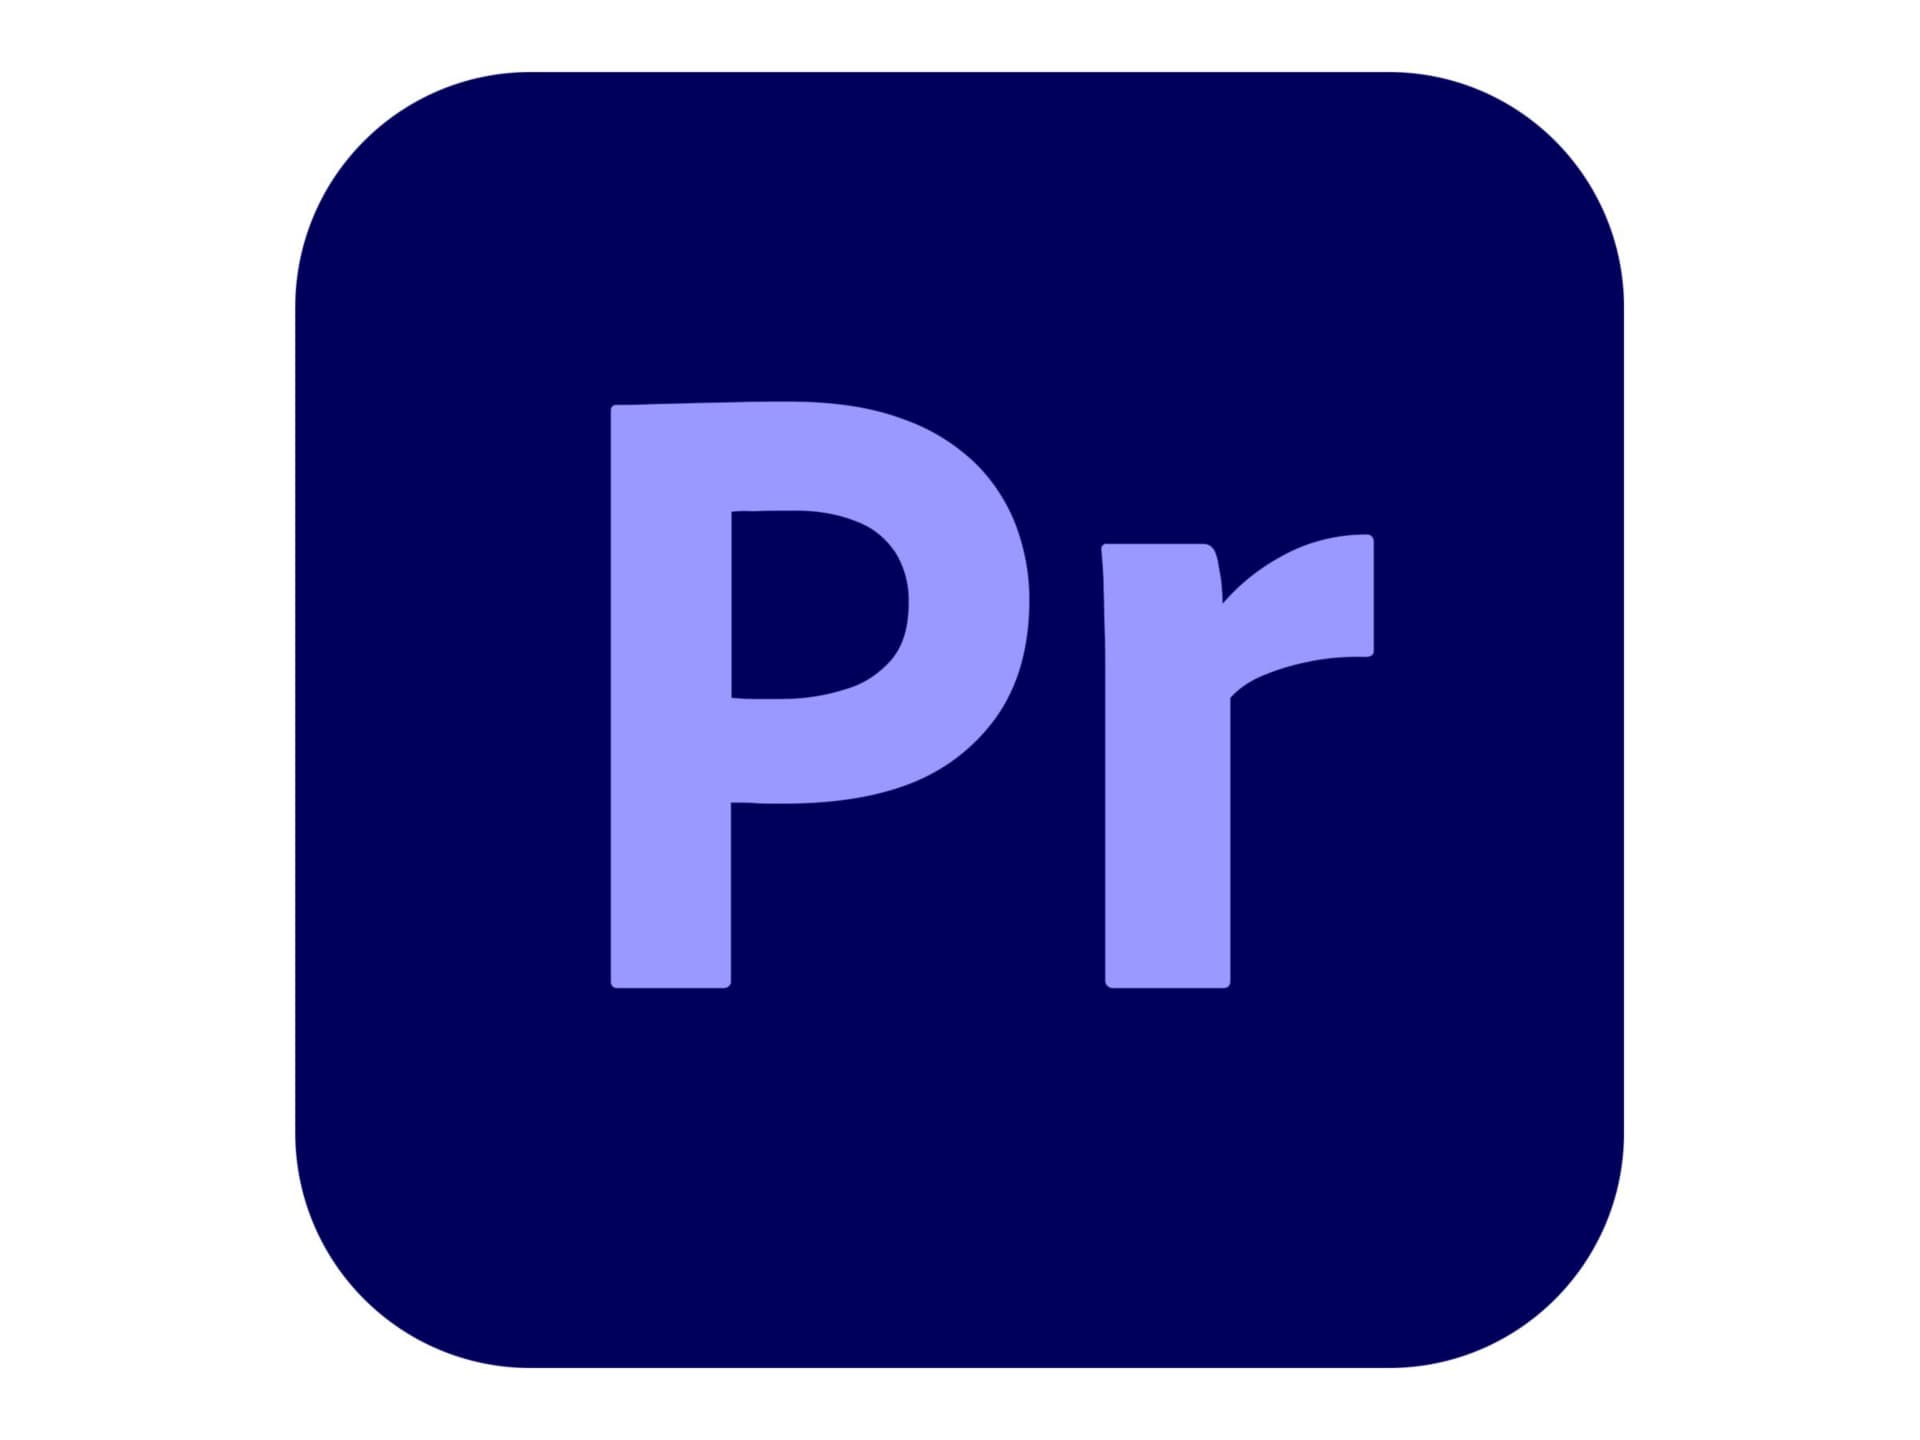 Adobe Premiere Pro for teams - Subscription New (annual) - 1 user